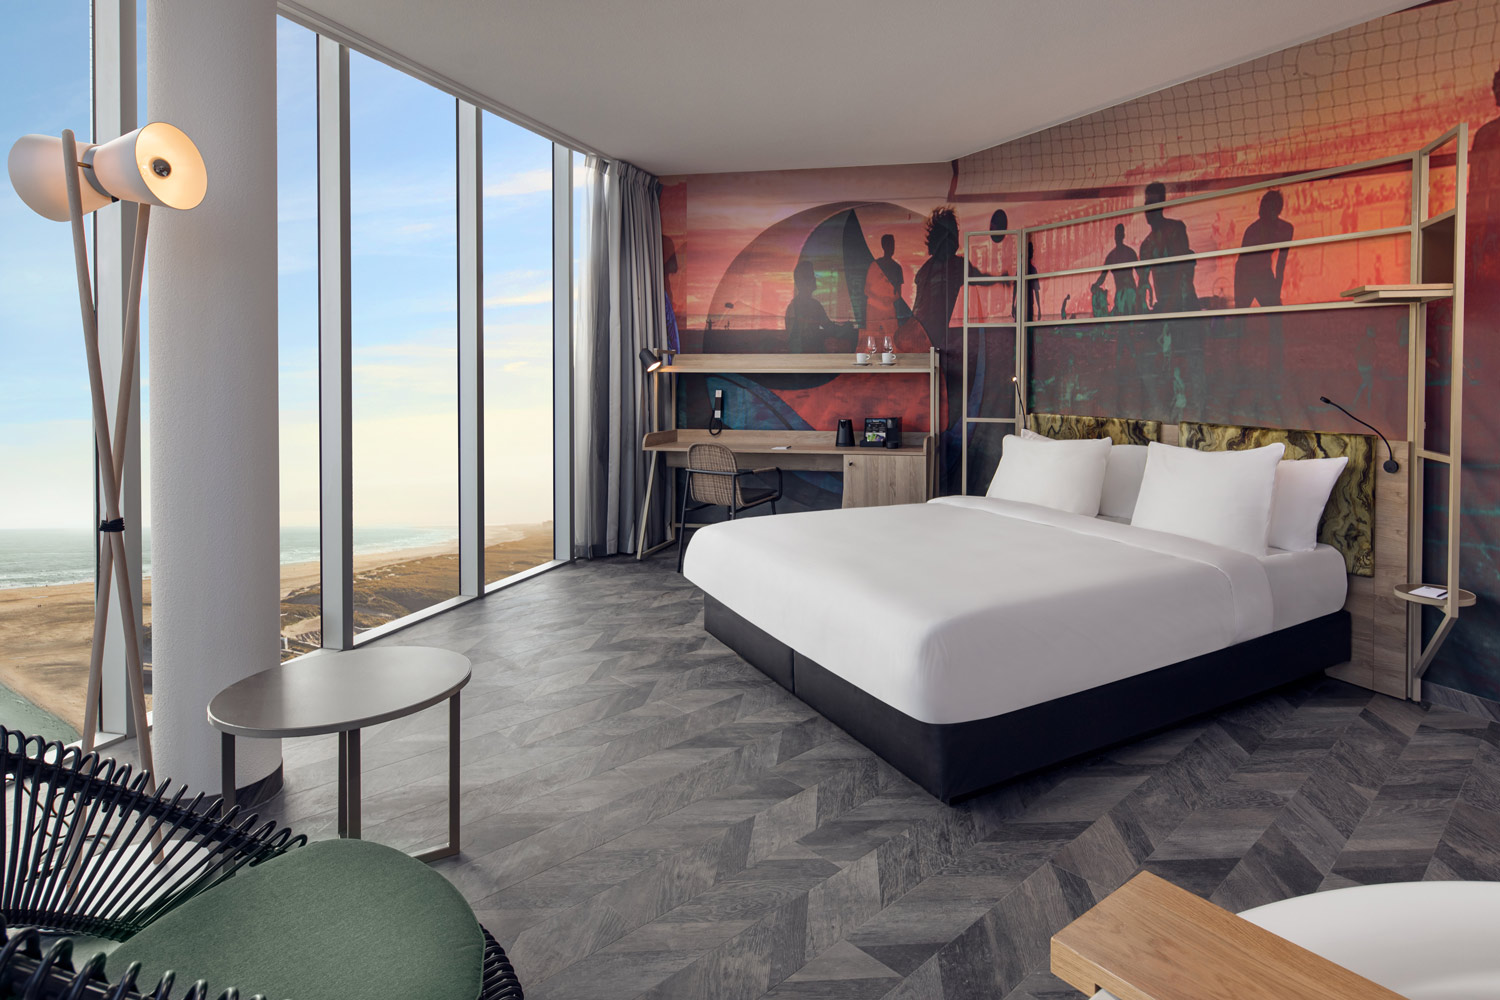 Inntel Hotels - Marina Beach - Hotel room overview